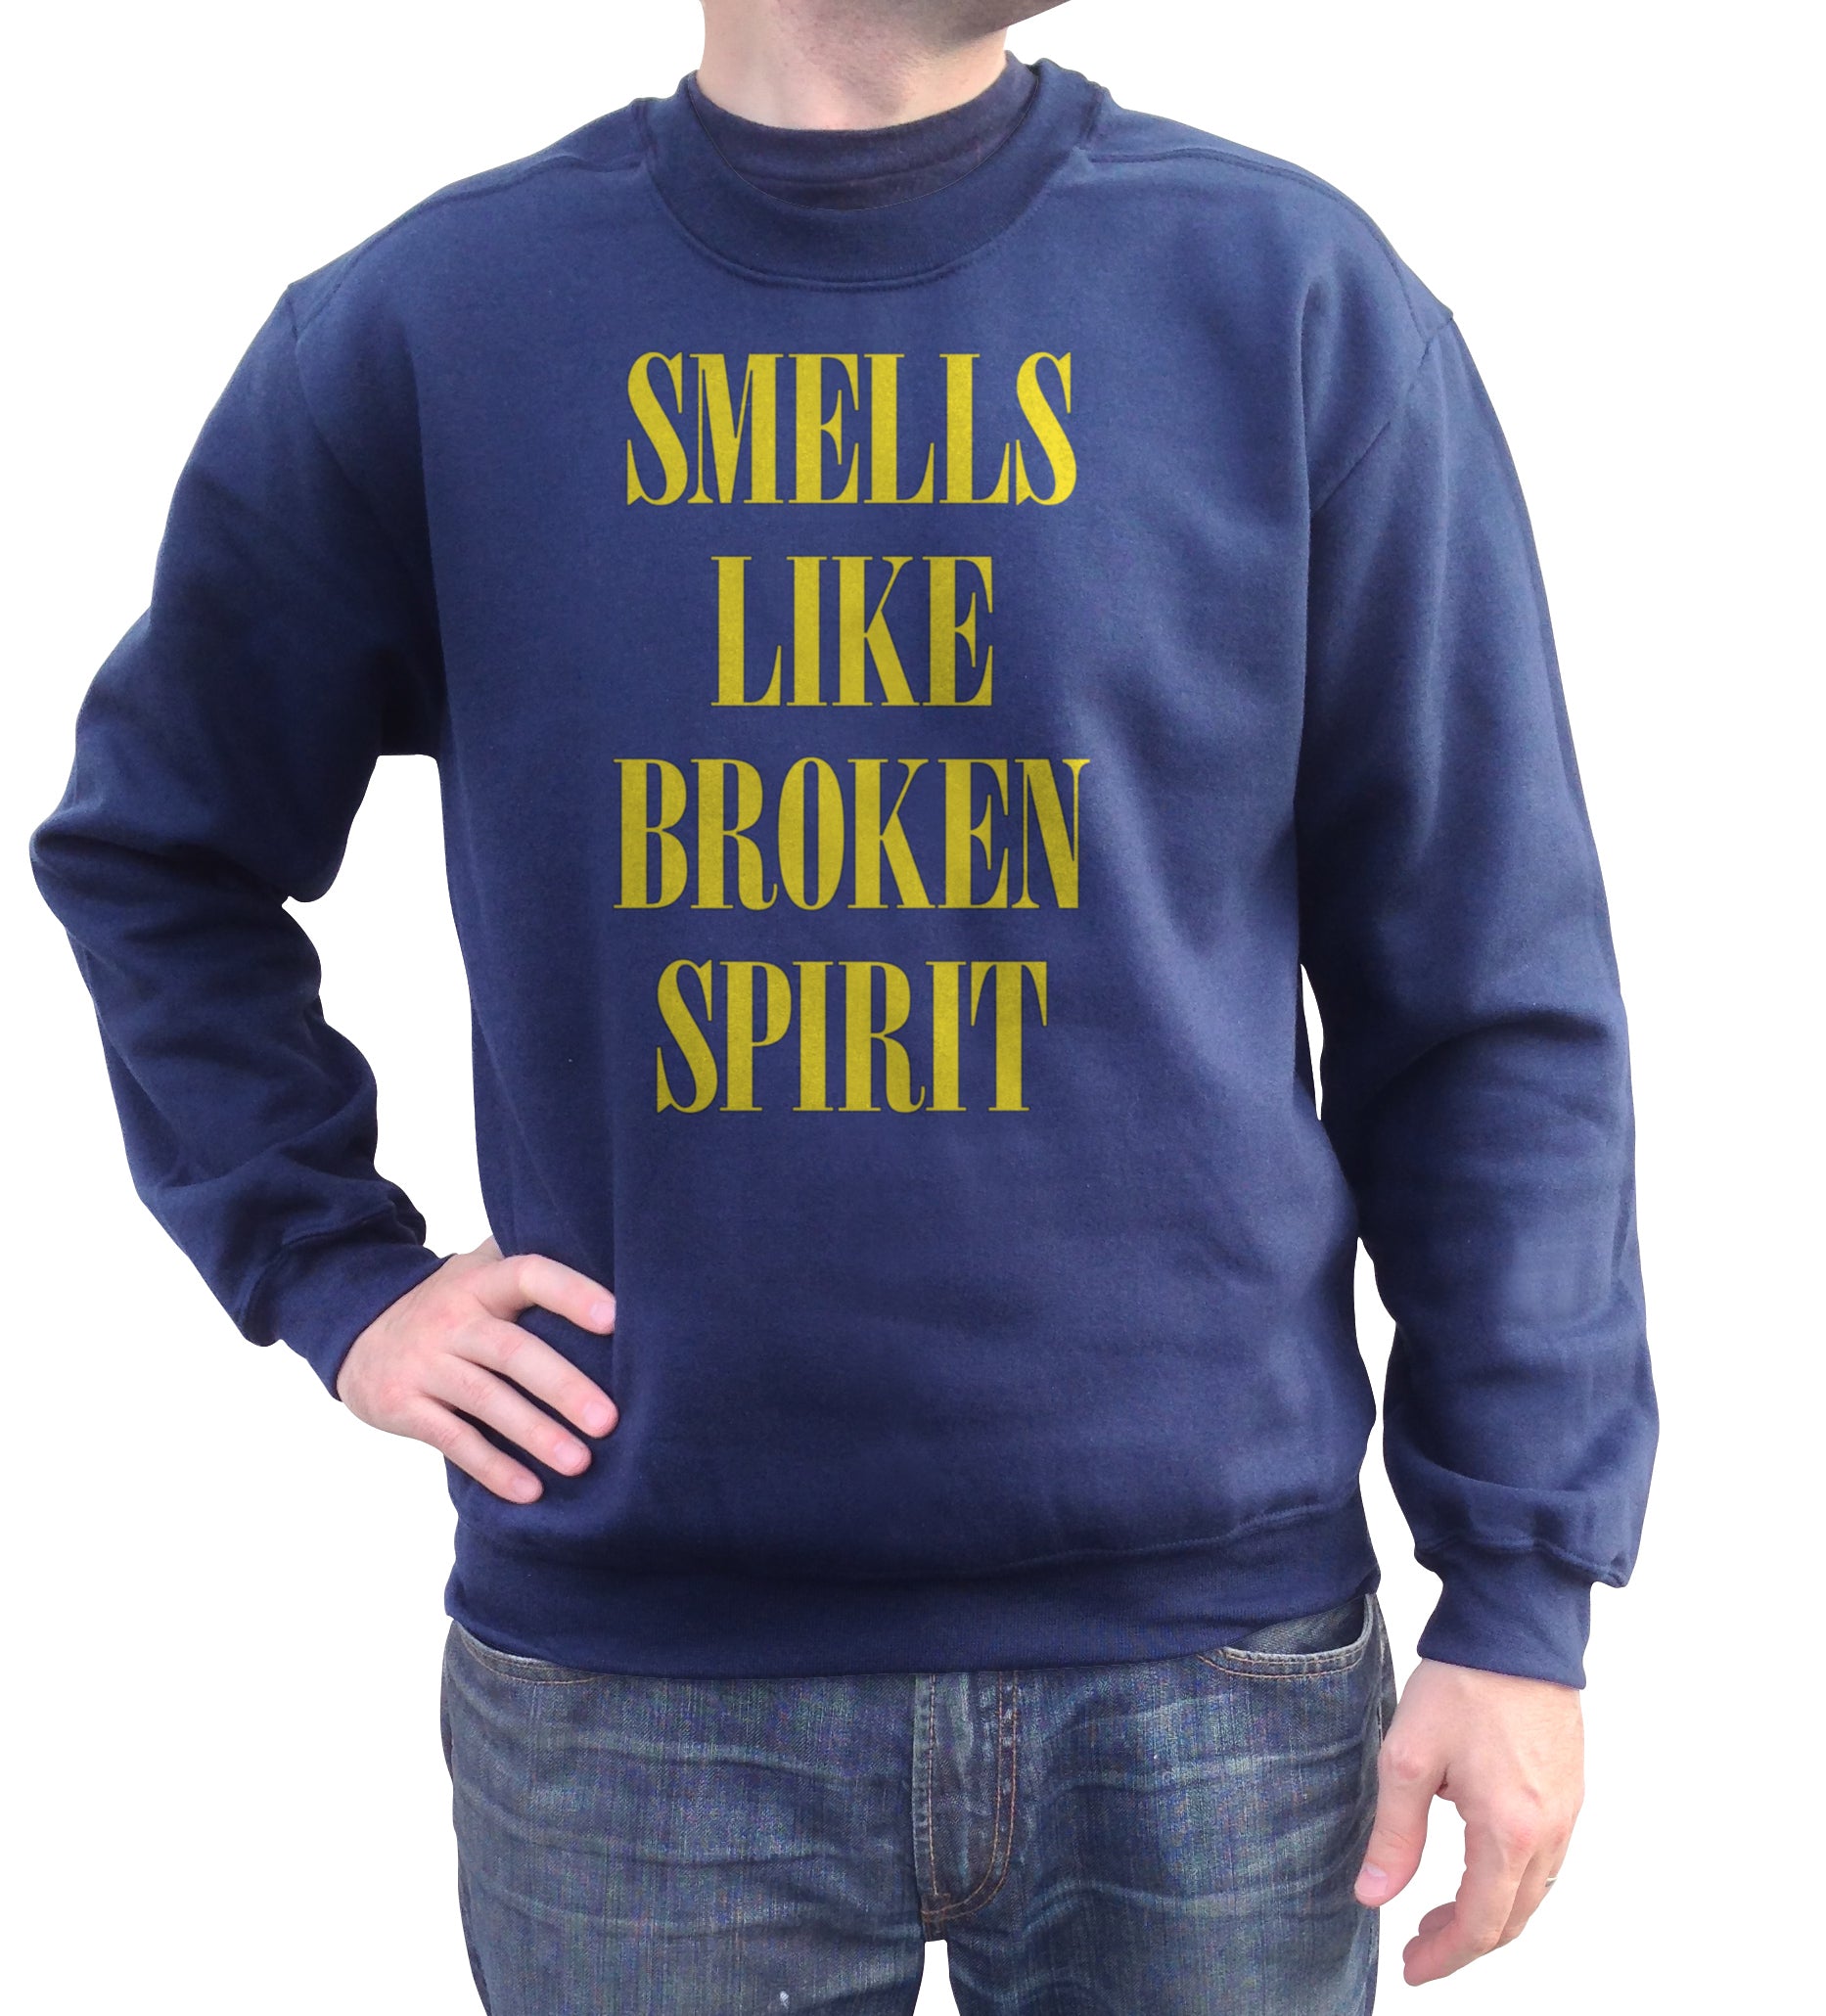 Unisex Smells Like Broken Spirit Sweatshirt